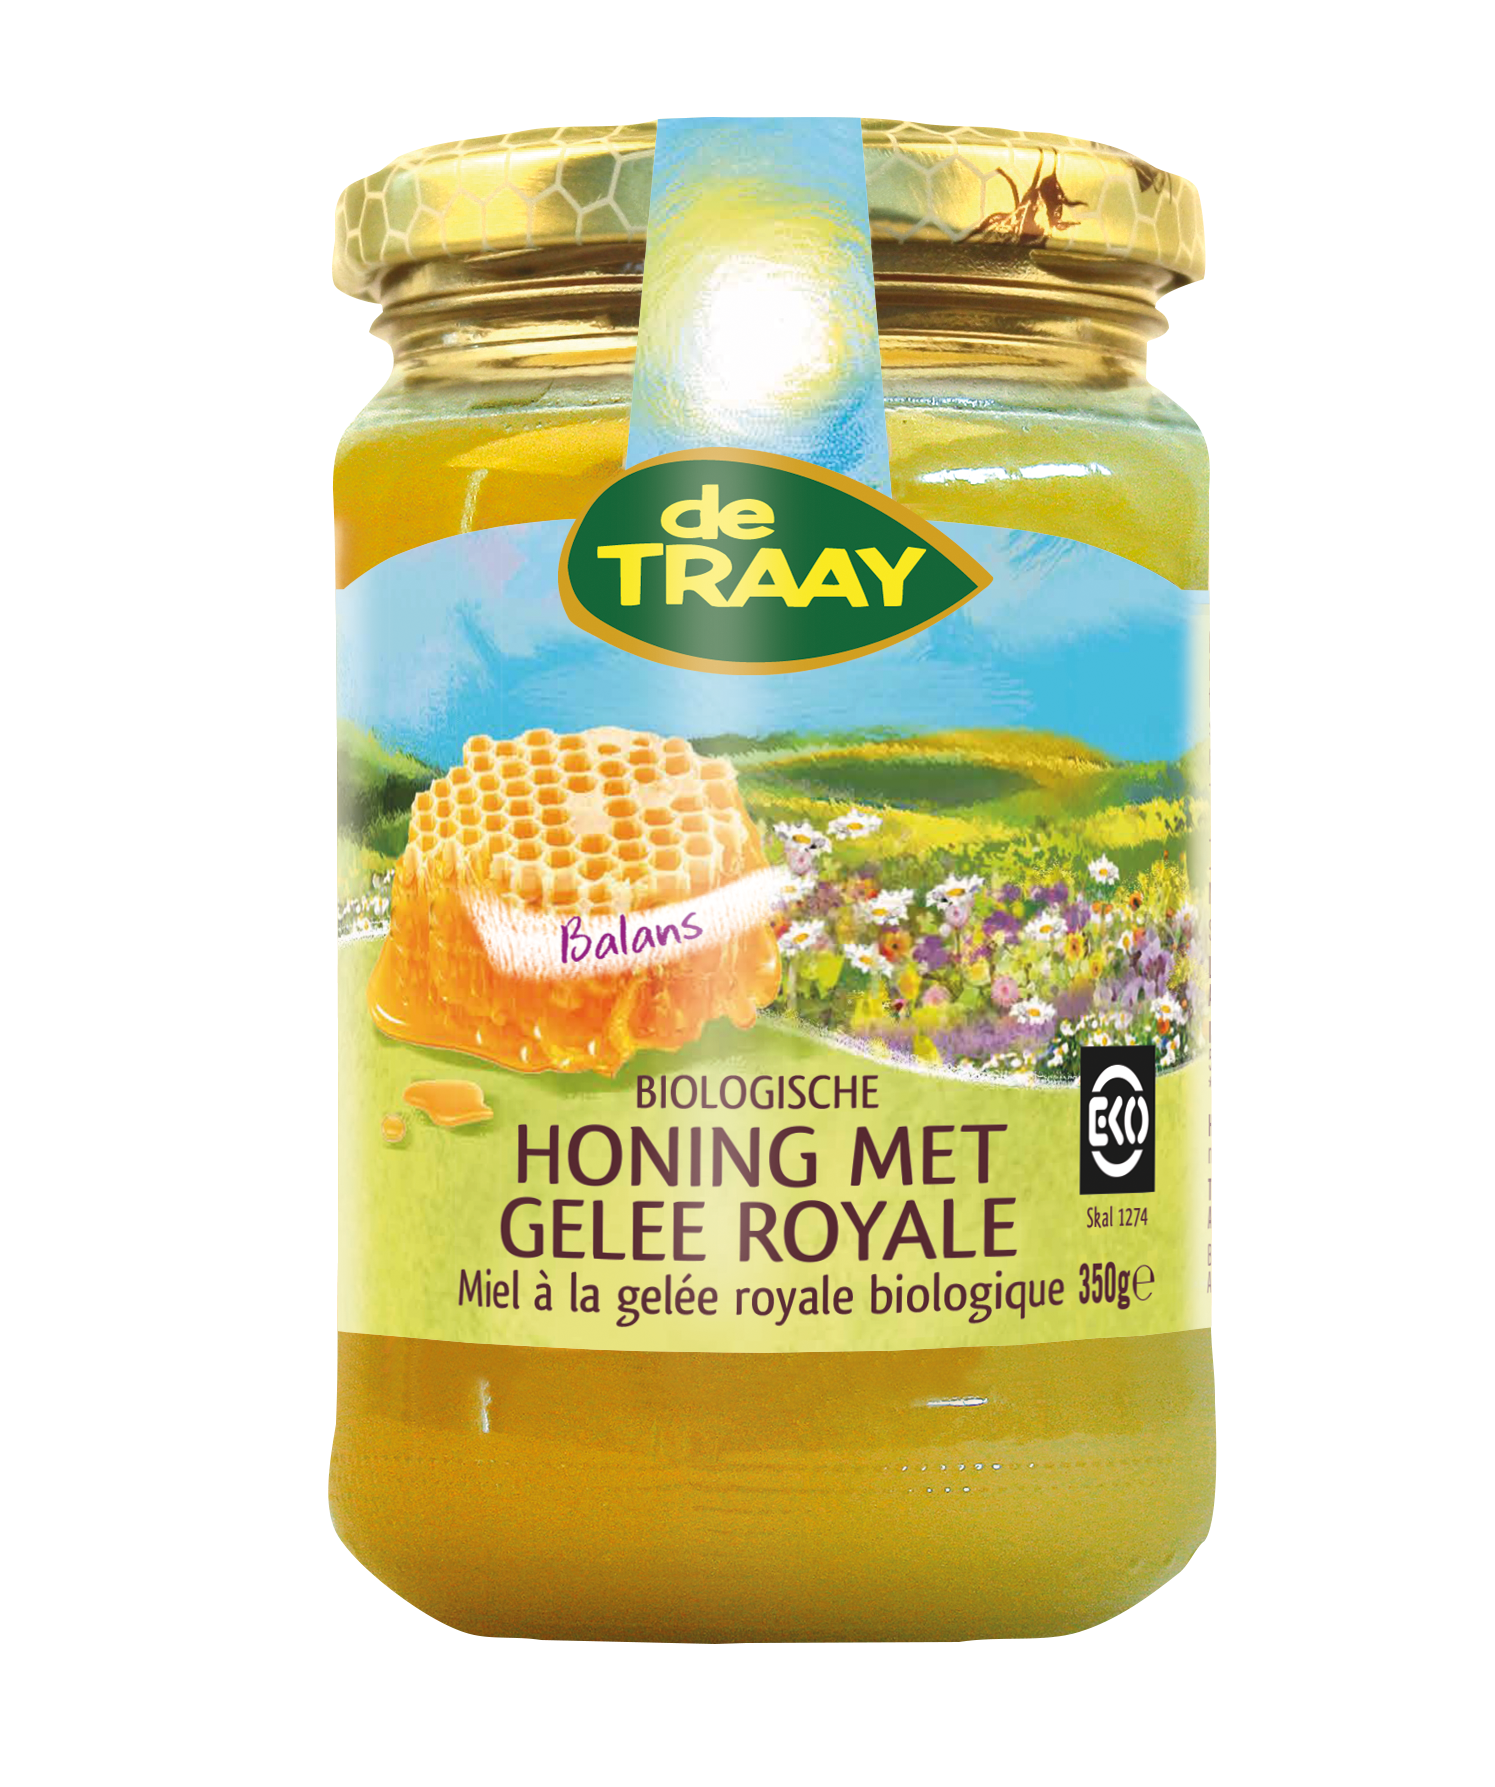 Organic honey with royal jelly